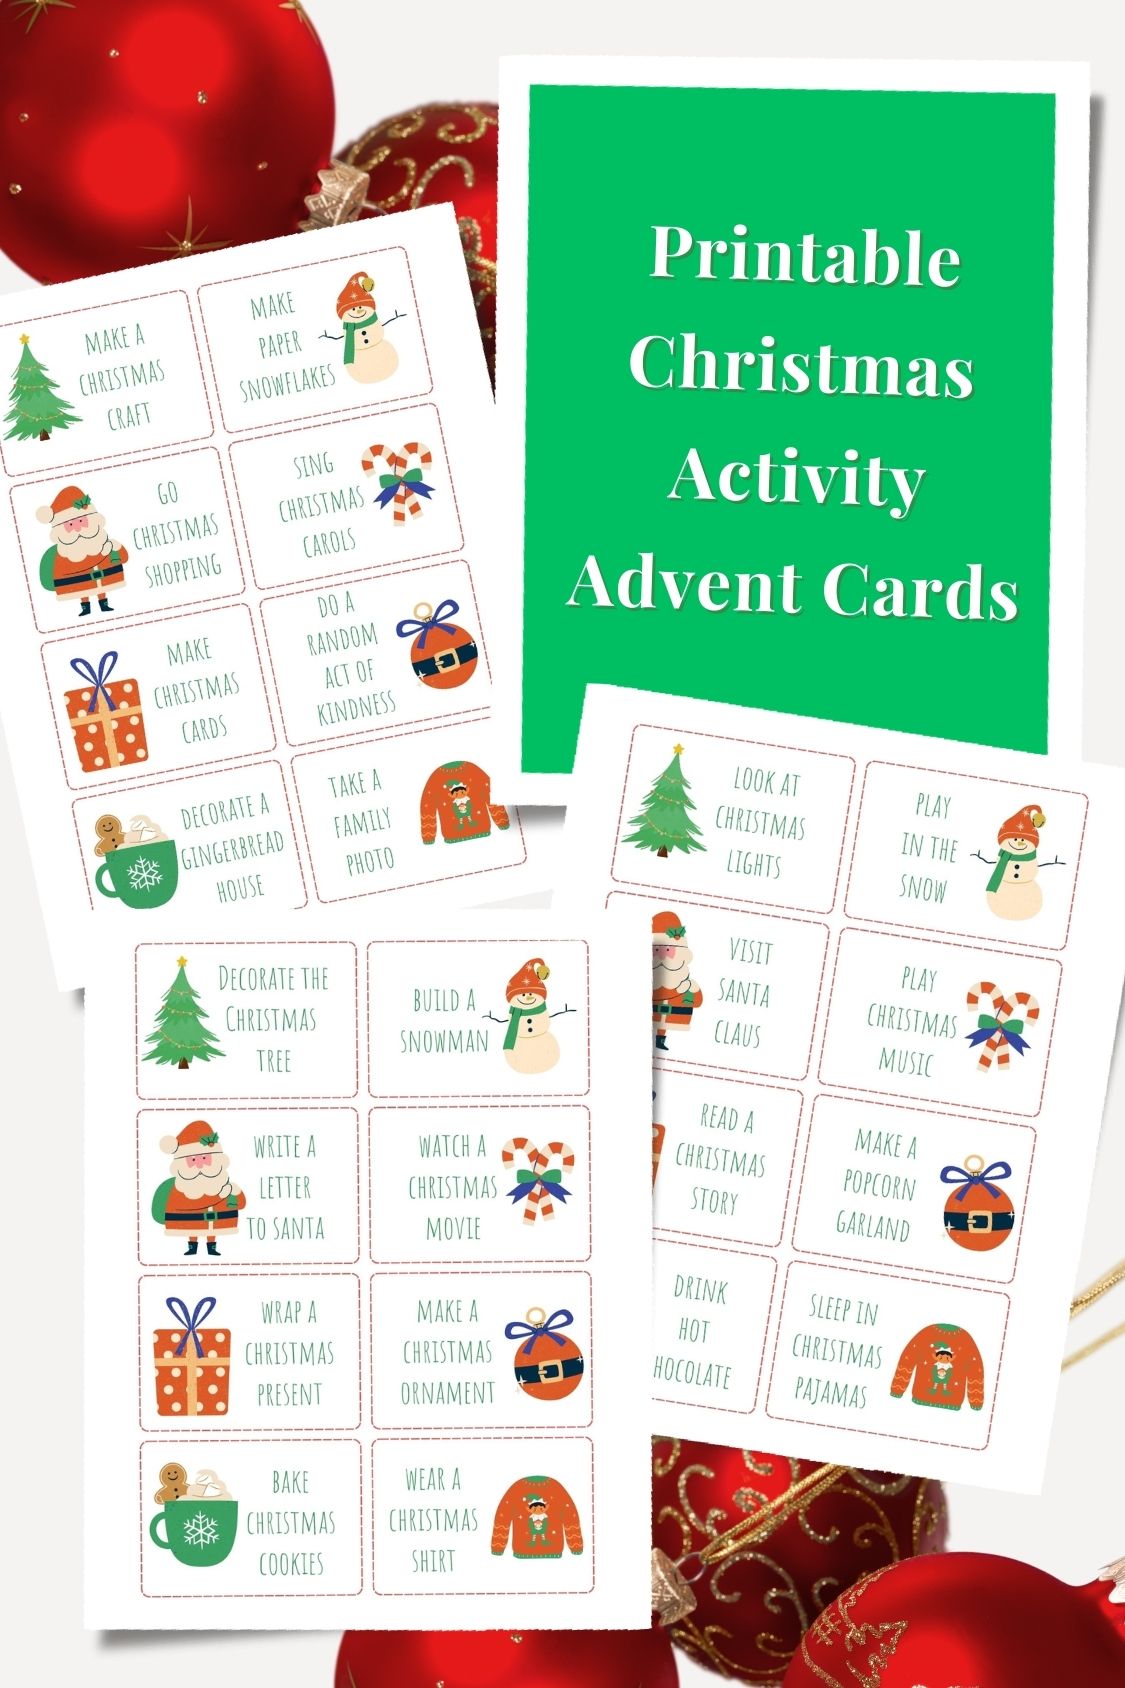 Printable Christmas Advent Activity Cards | Today's Creative Ideas